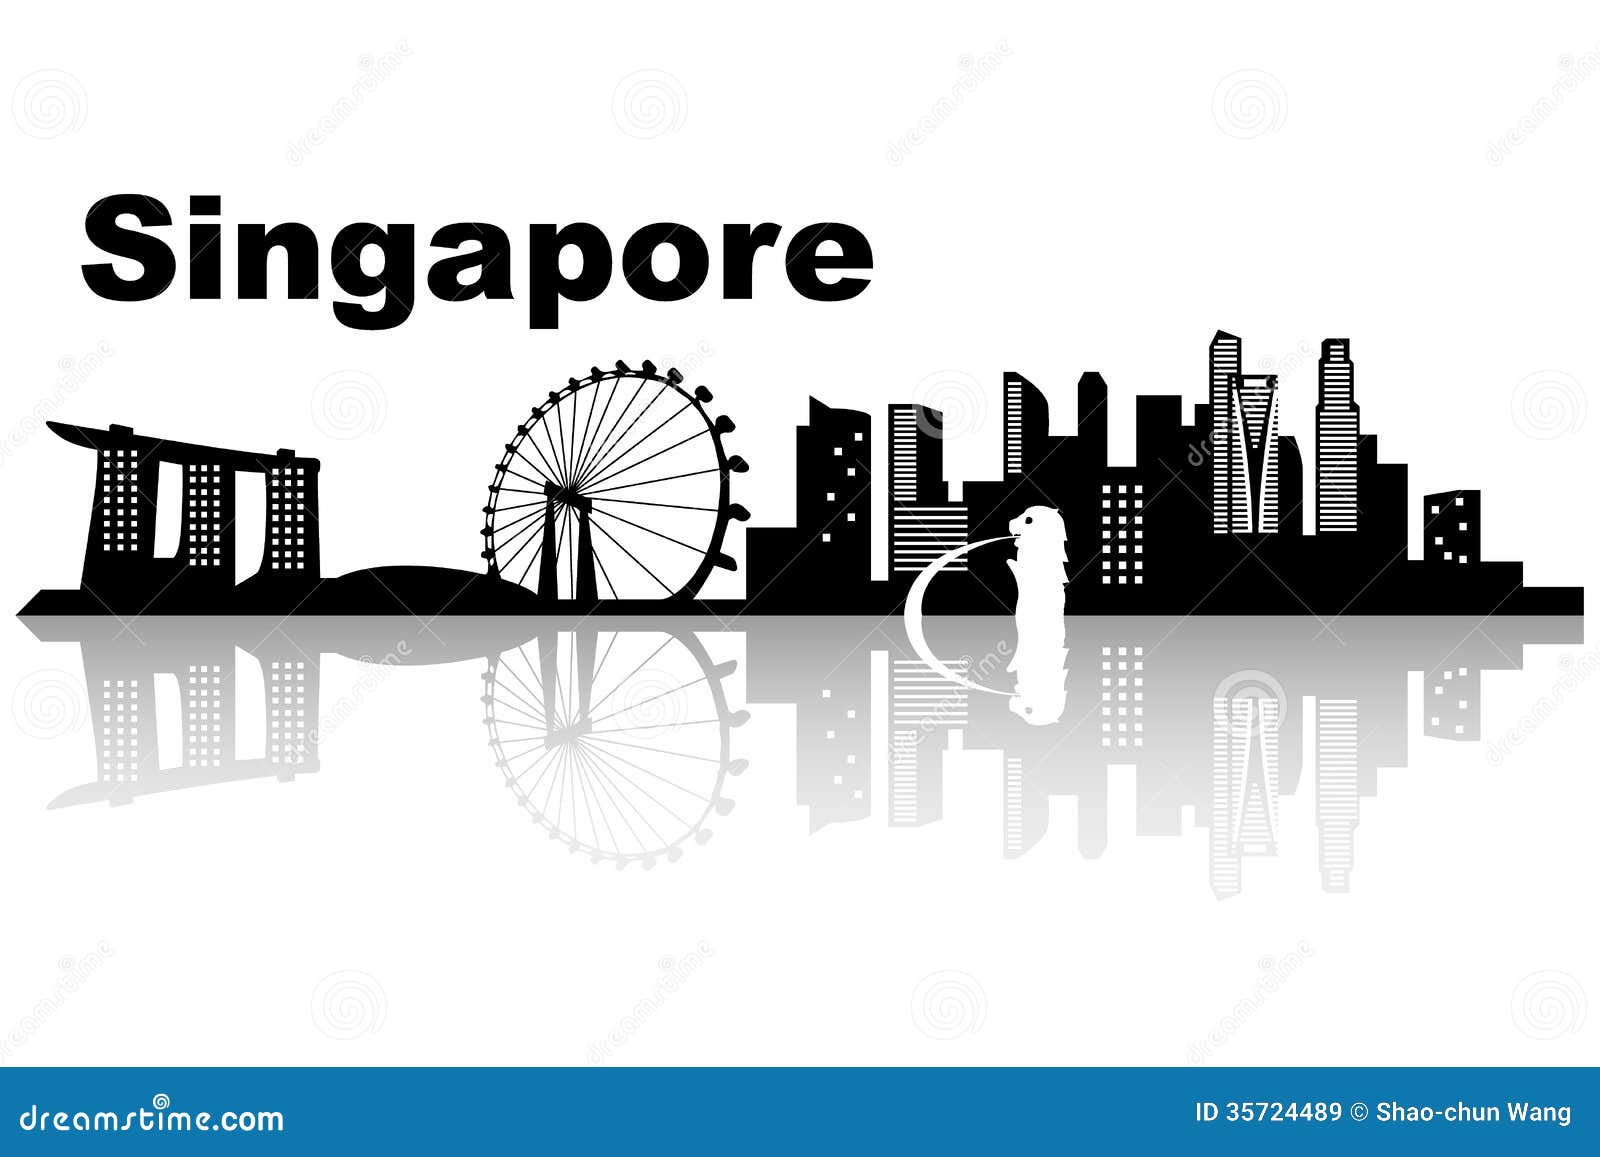 singapore flyer clipart - photo #16